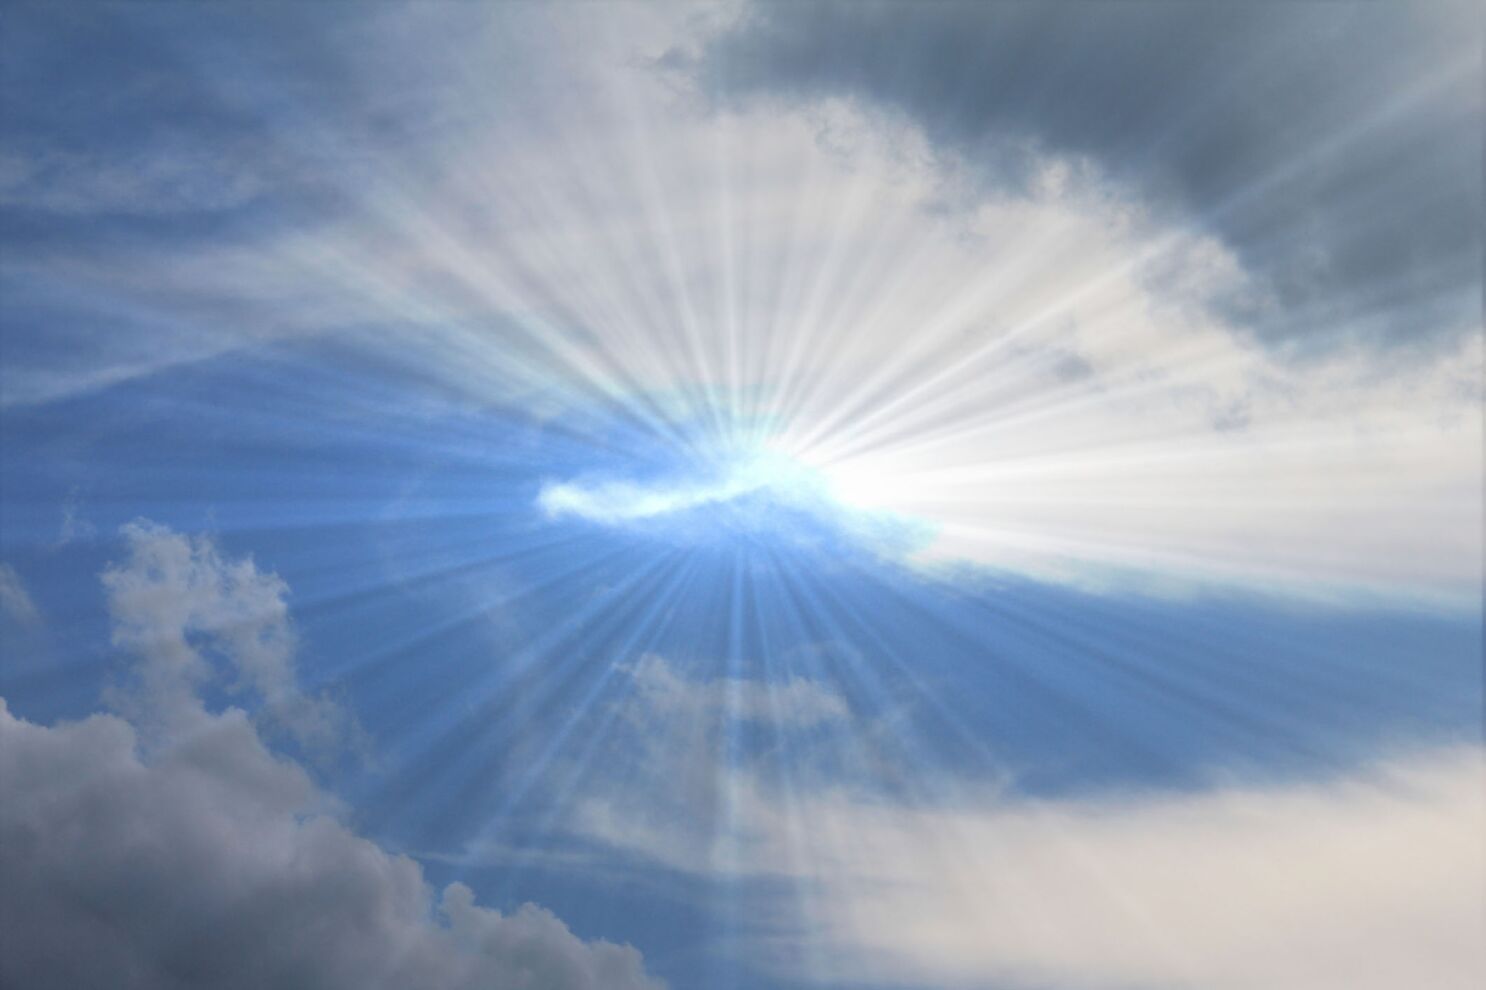 Holy Spirit shines light on Jesus us all - San Diego Union-Tribune